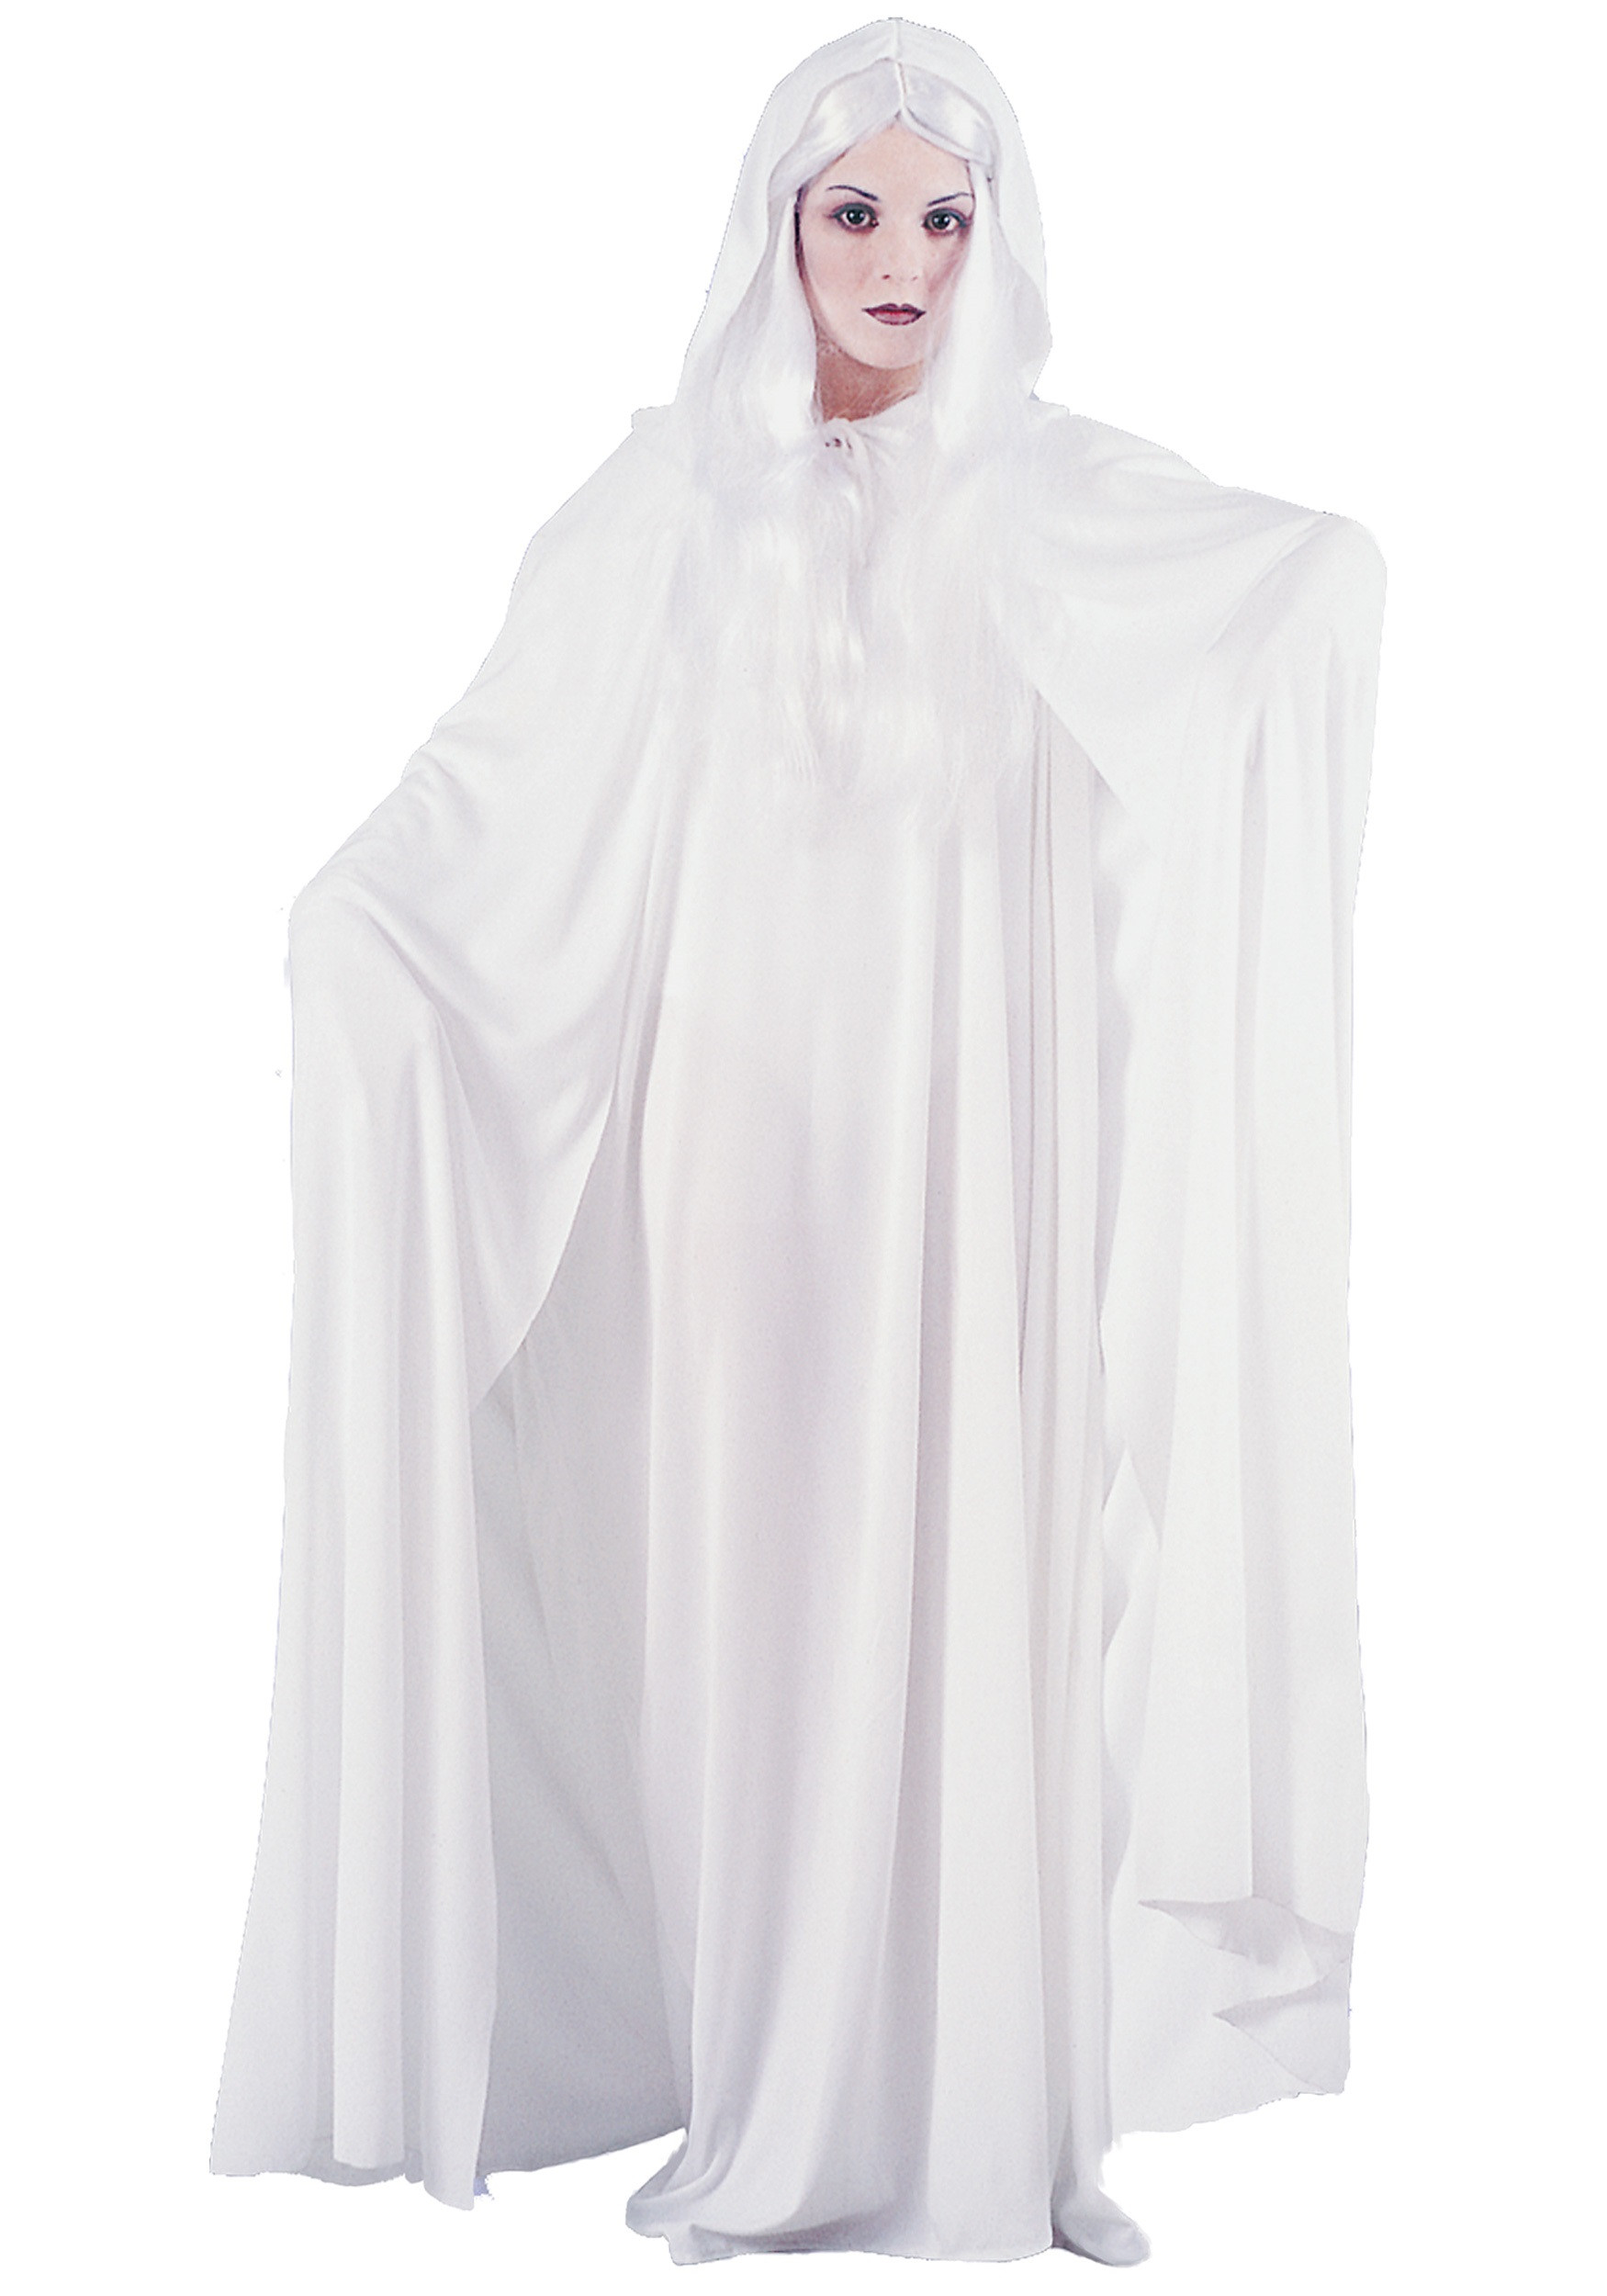 DIY Ghost Costume
 Adult Gossamer Ghost Costume